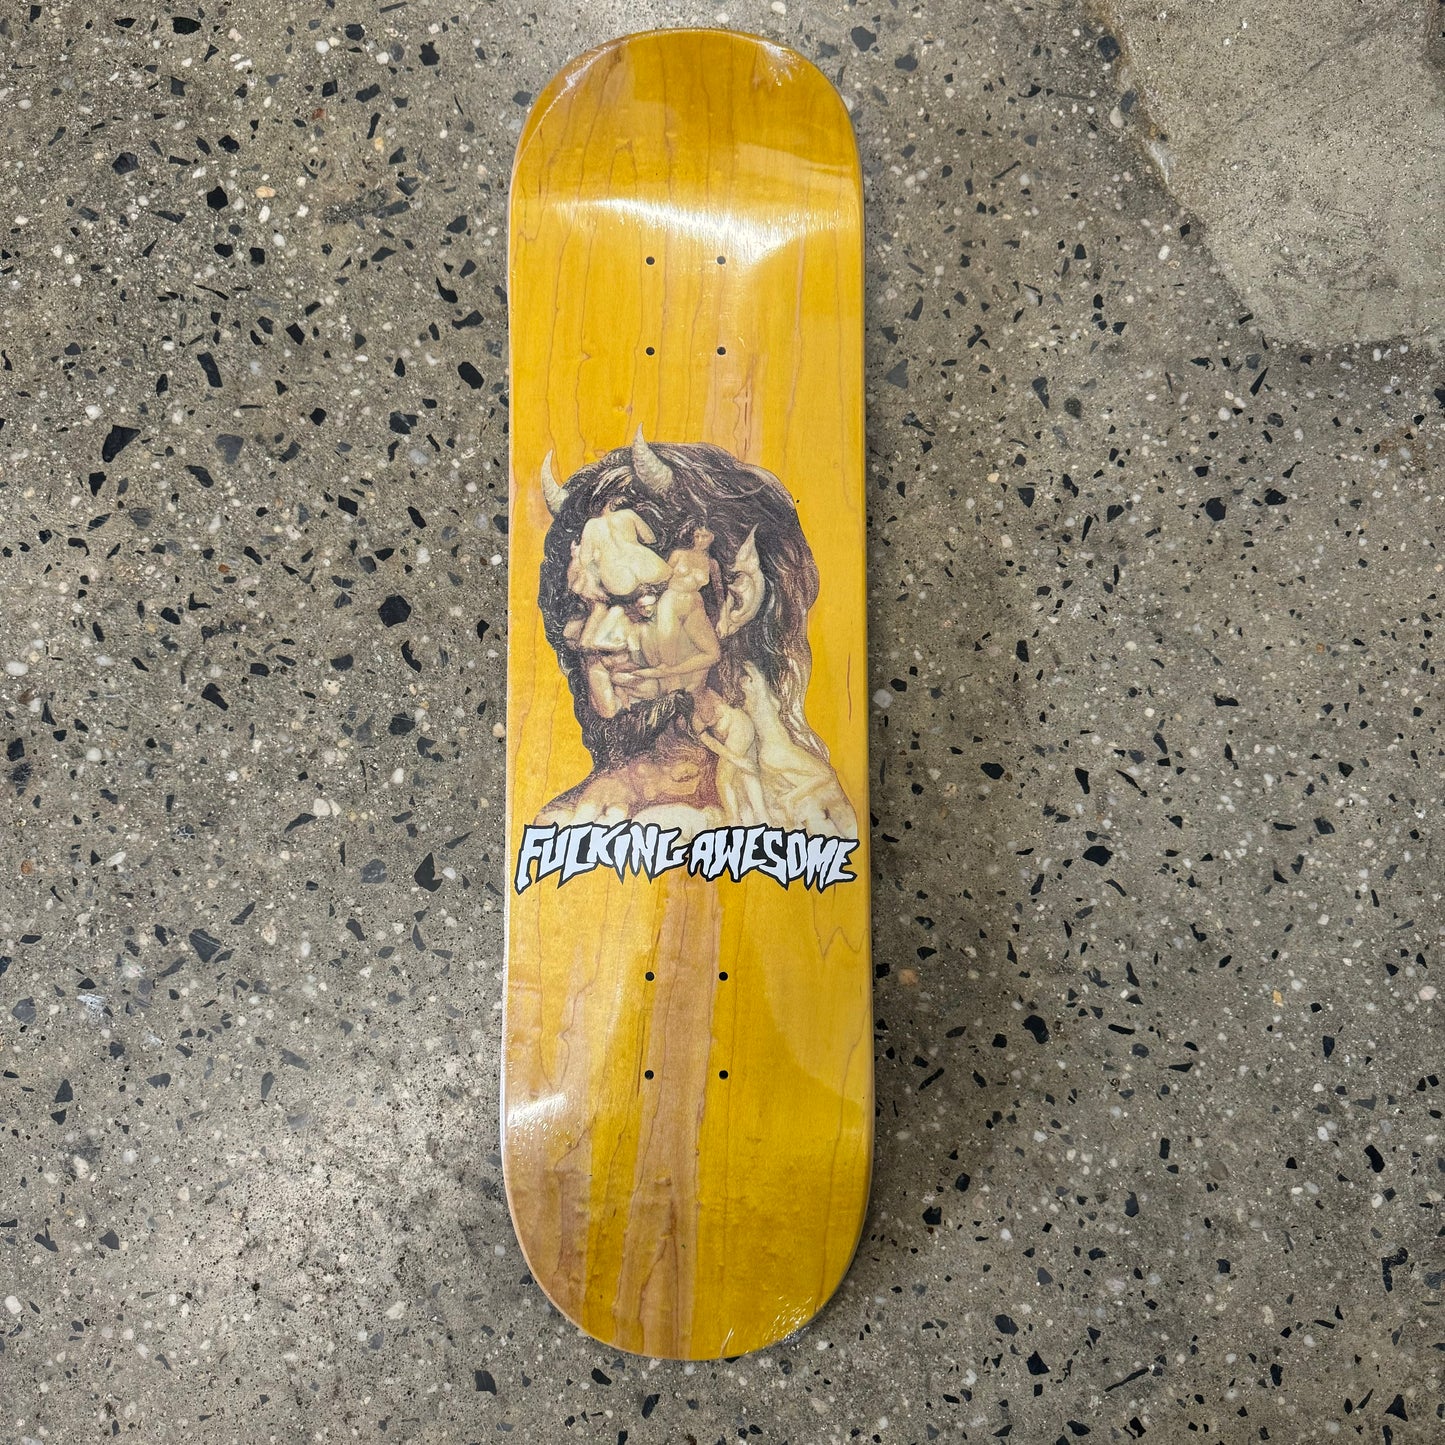 monster head on yellow skate deck